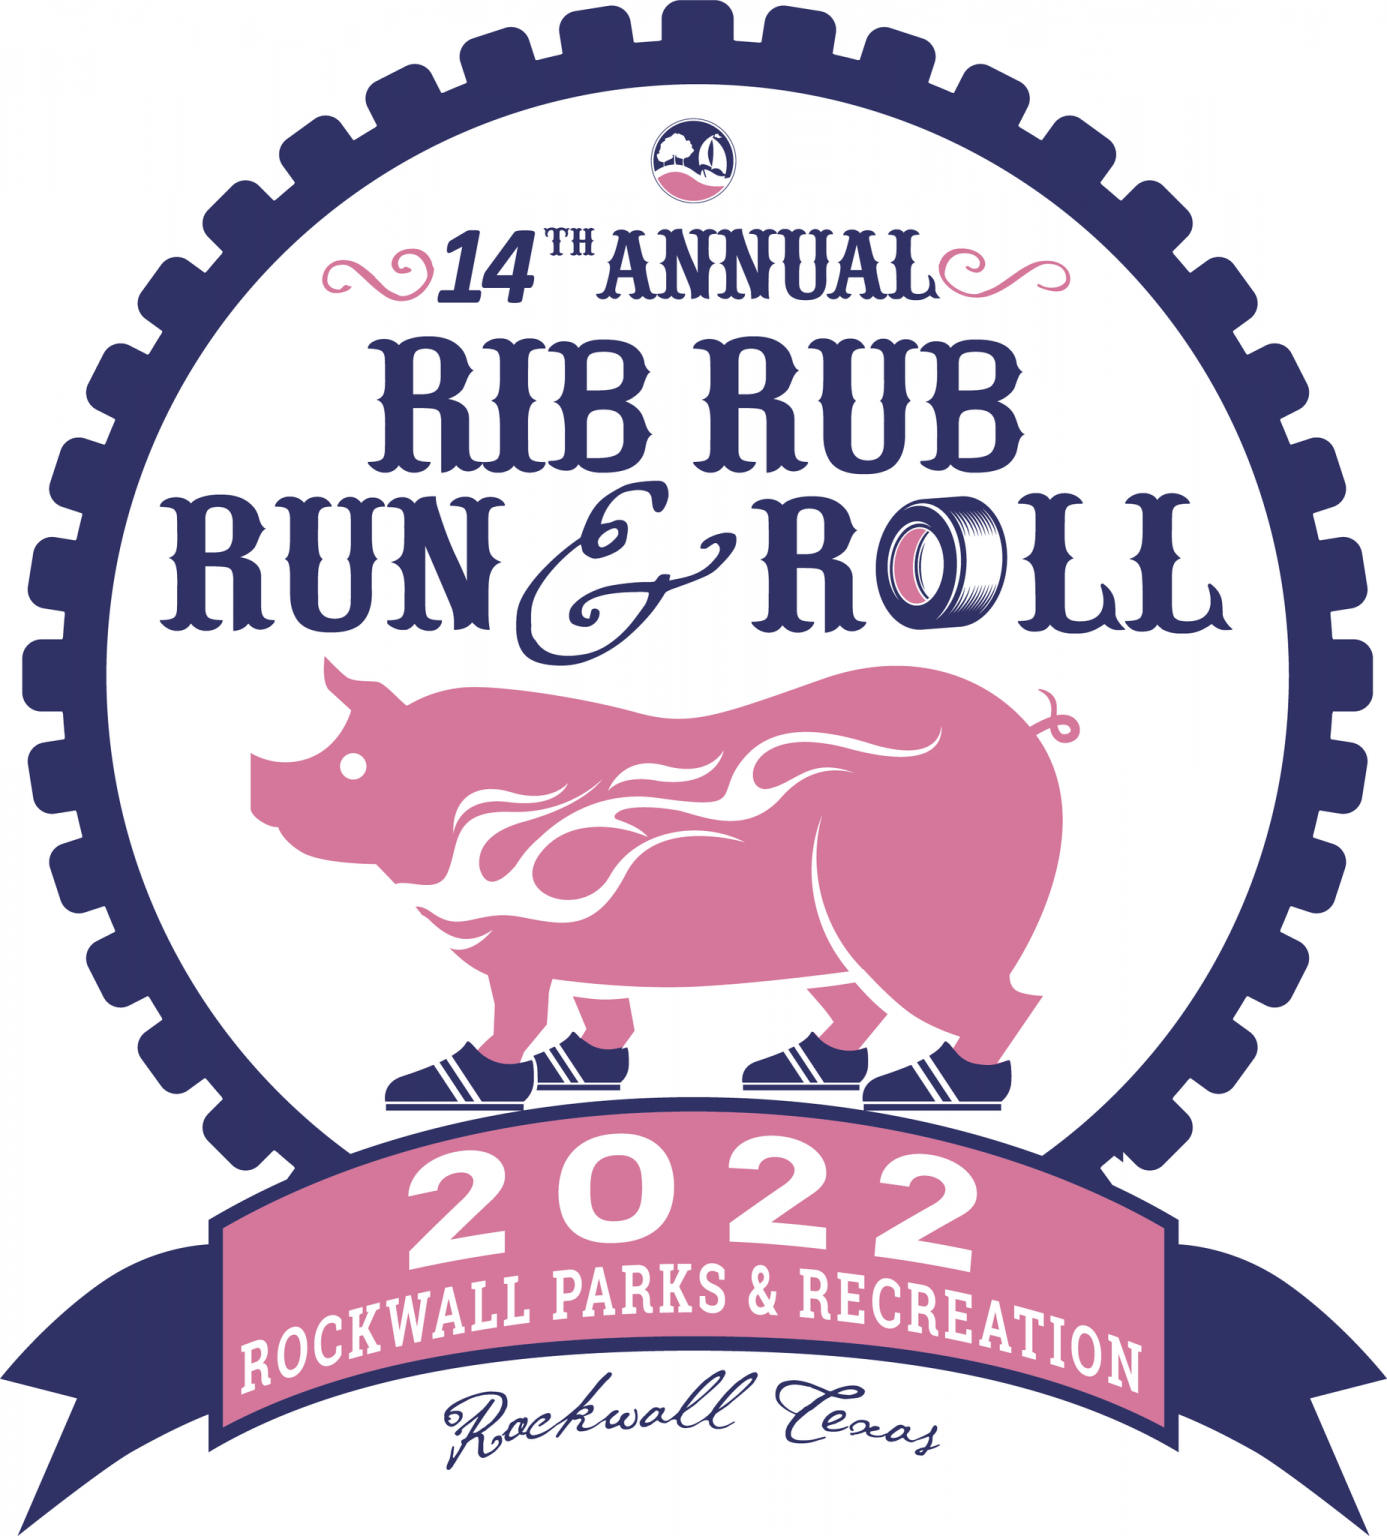 Schedule for Rockwall Rib Rub, Run & Roll Oct. 1 Blue Ribbon News